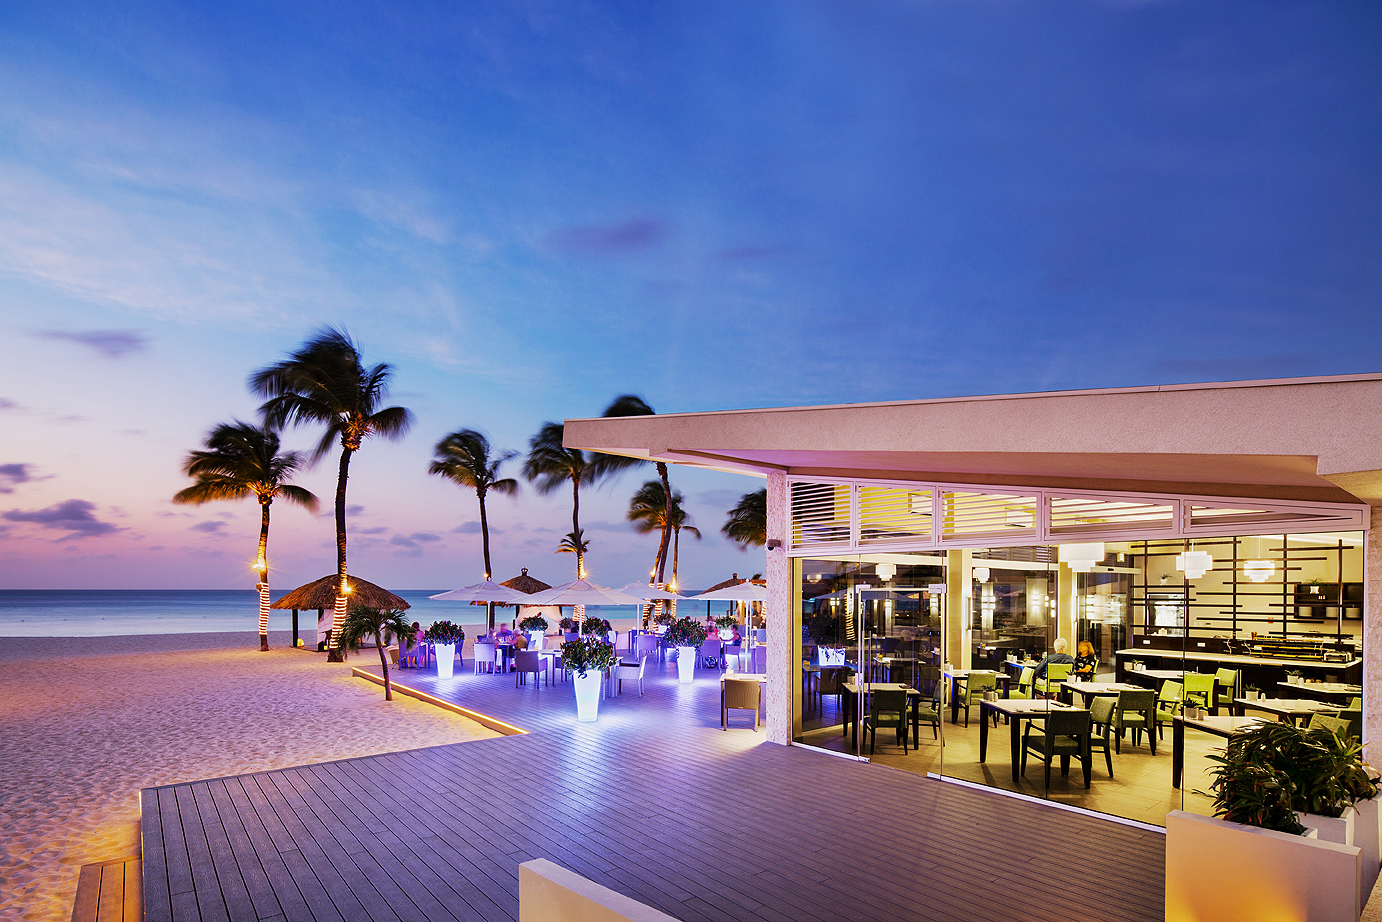 Bucuti & Tara Beach Resorts Oranjestad Aruba Aruba Hotels Caribbean Small & Elegant